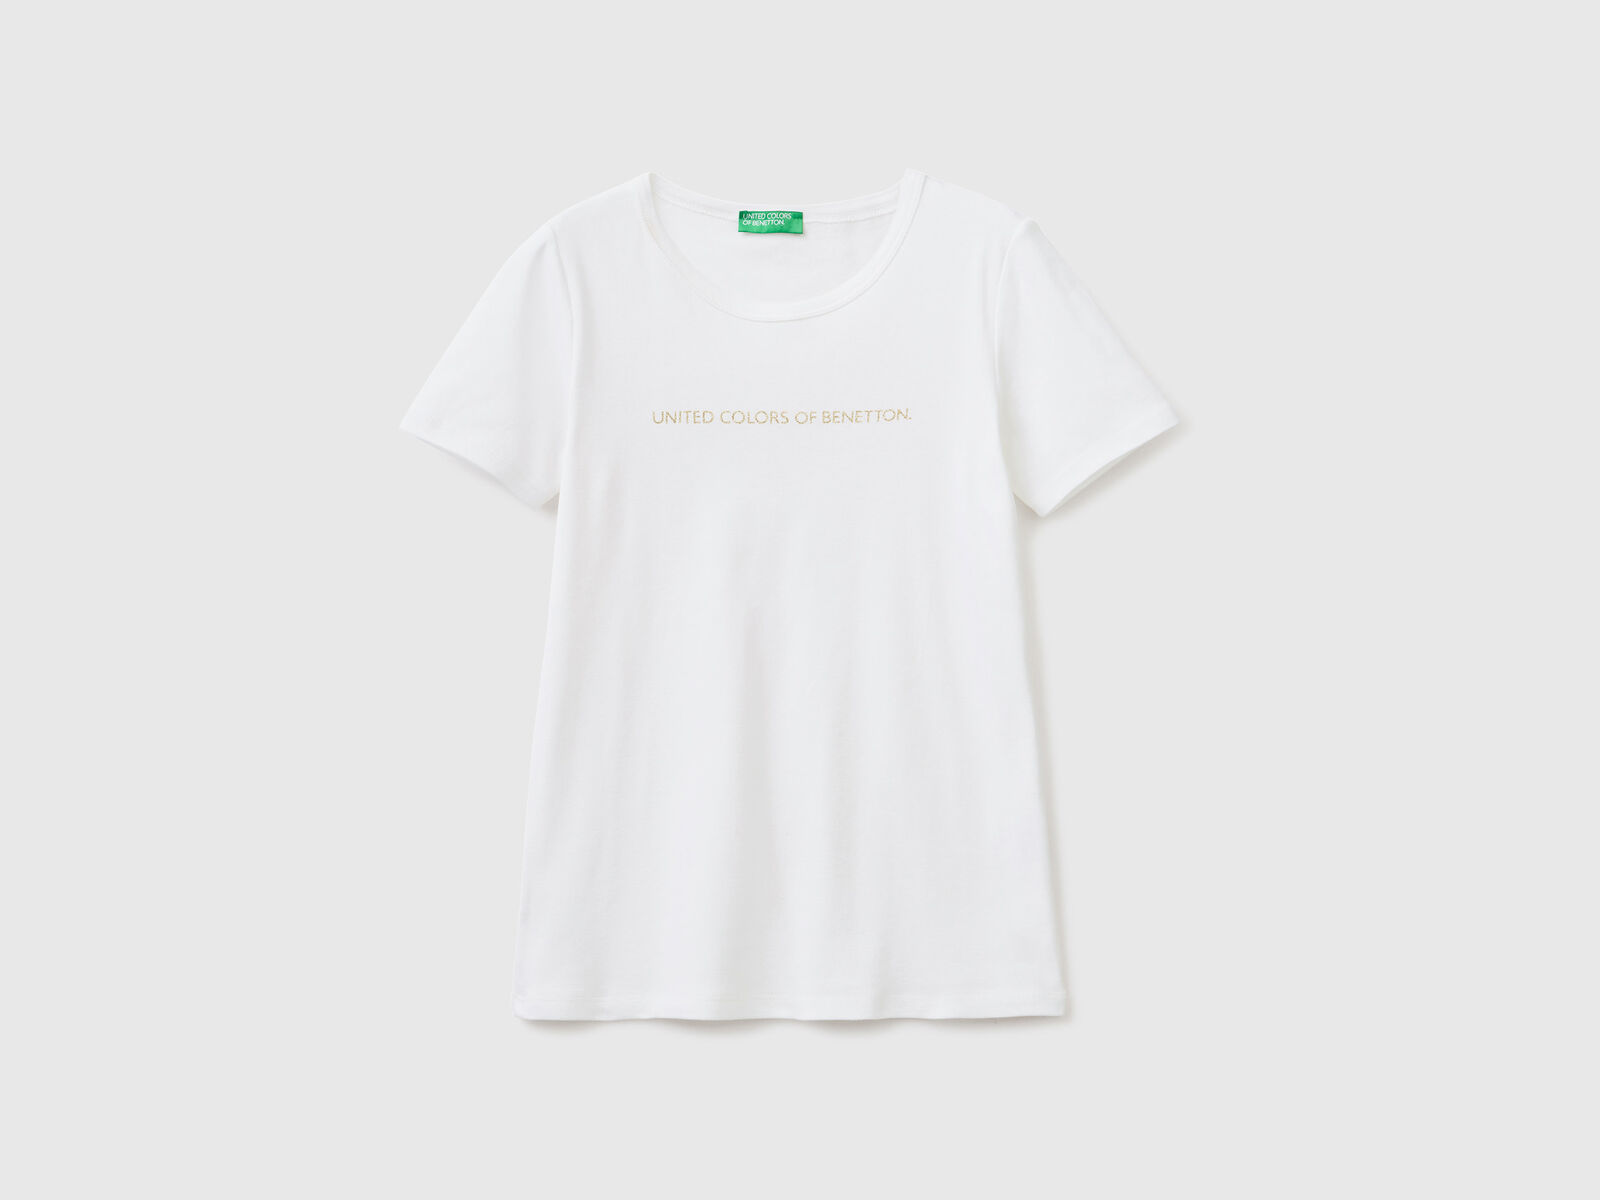 T-shirt in White 100% print cotton logo - glitter Benetton with 